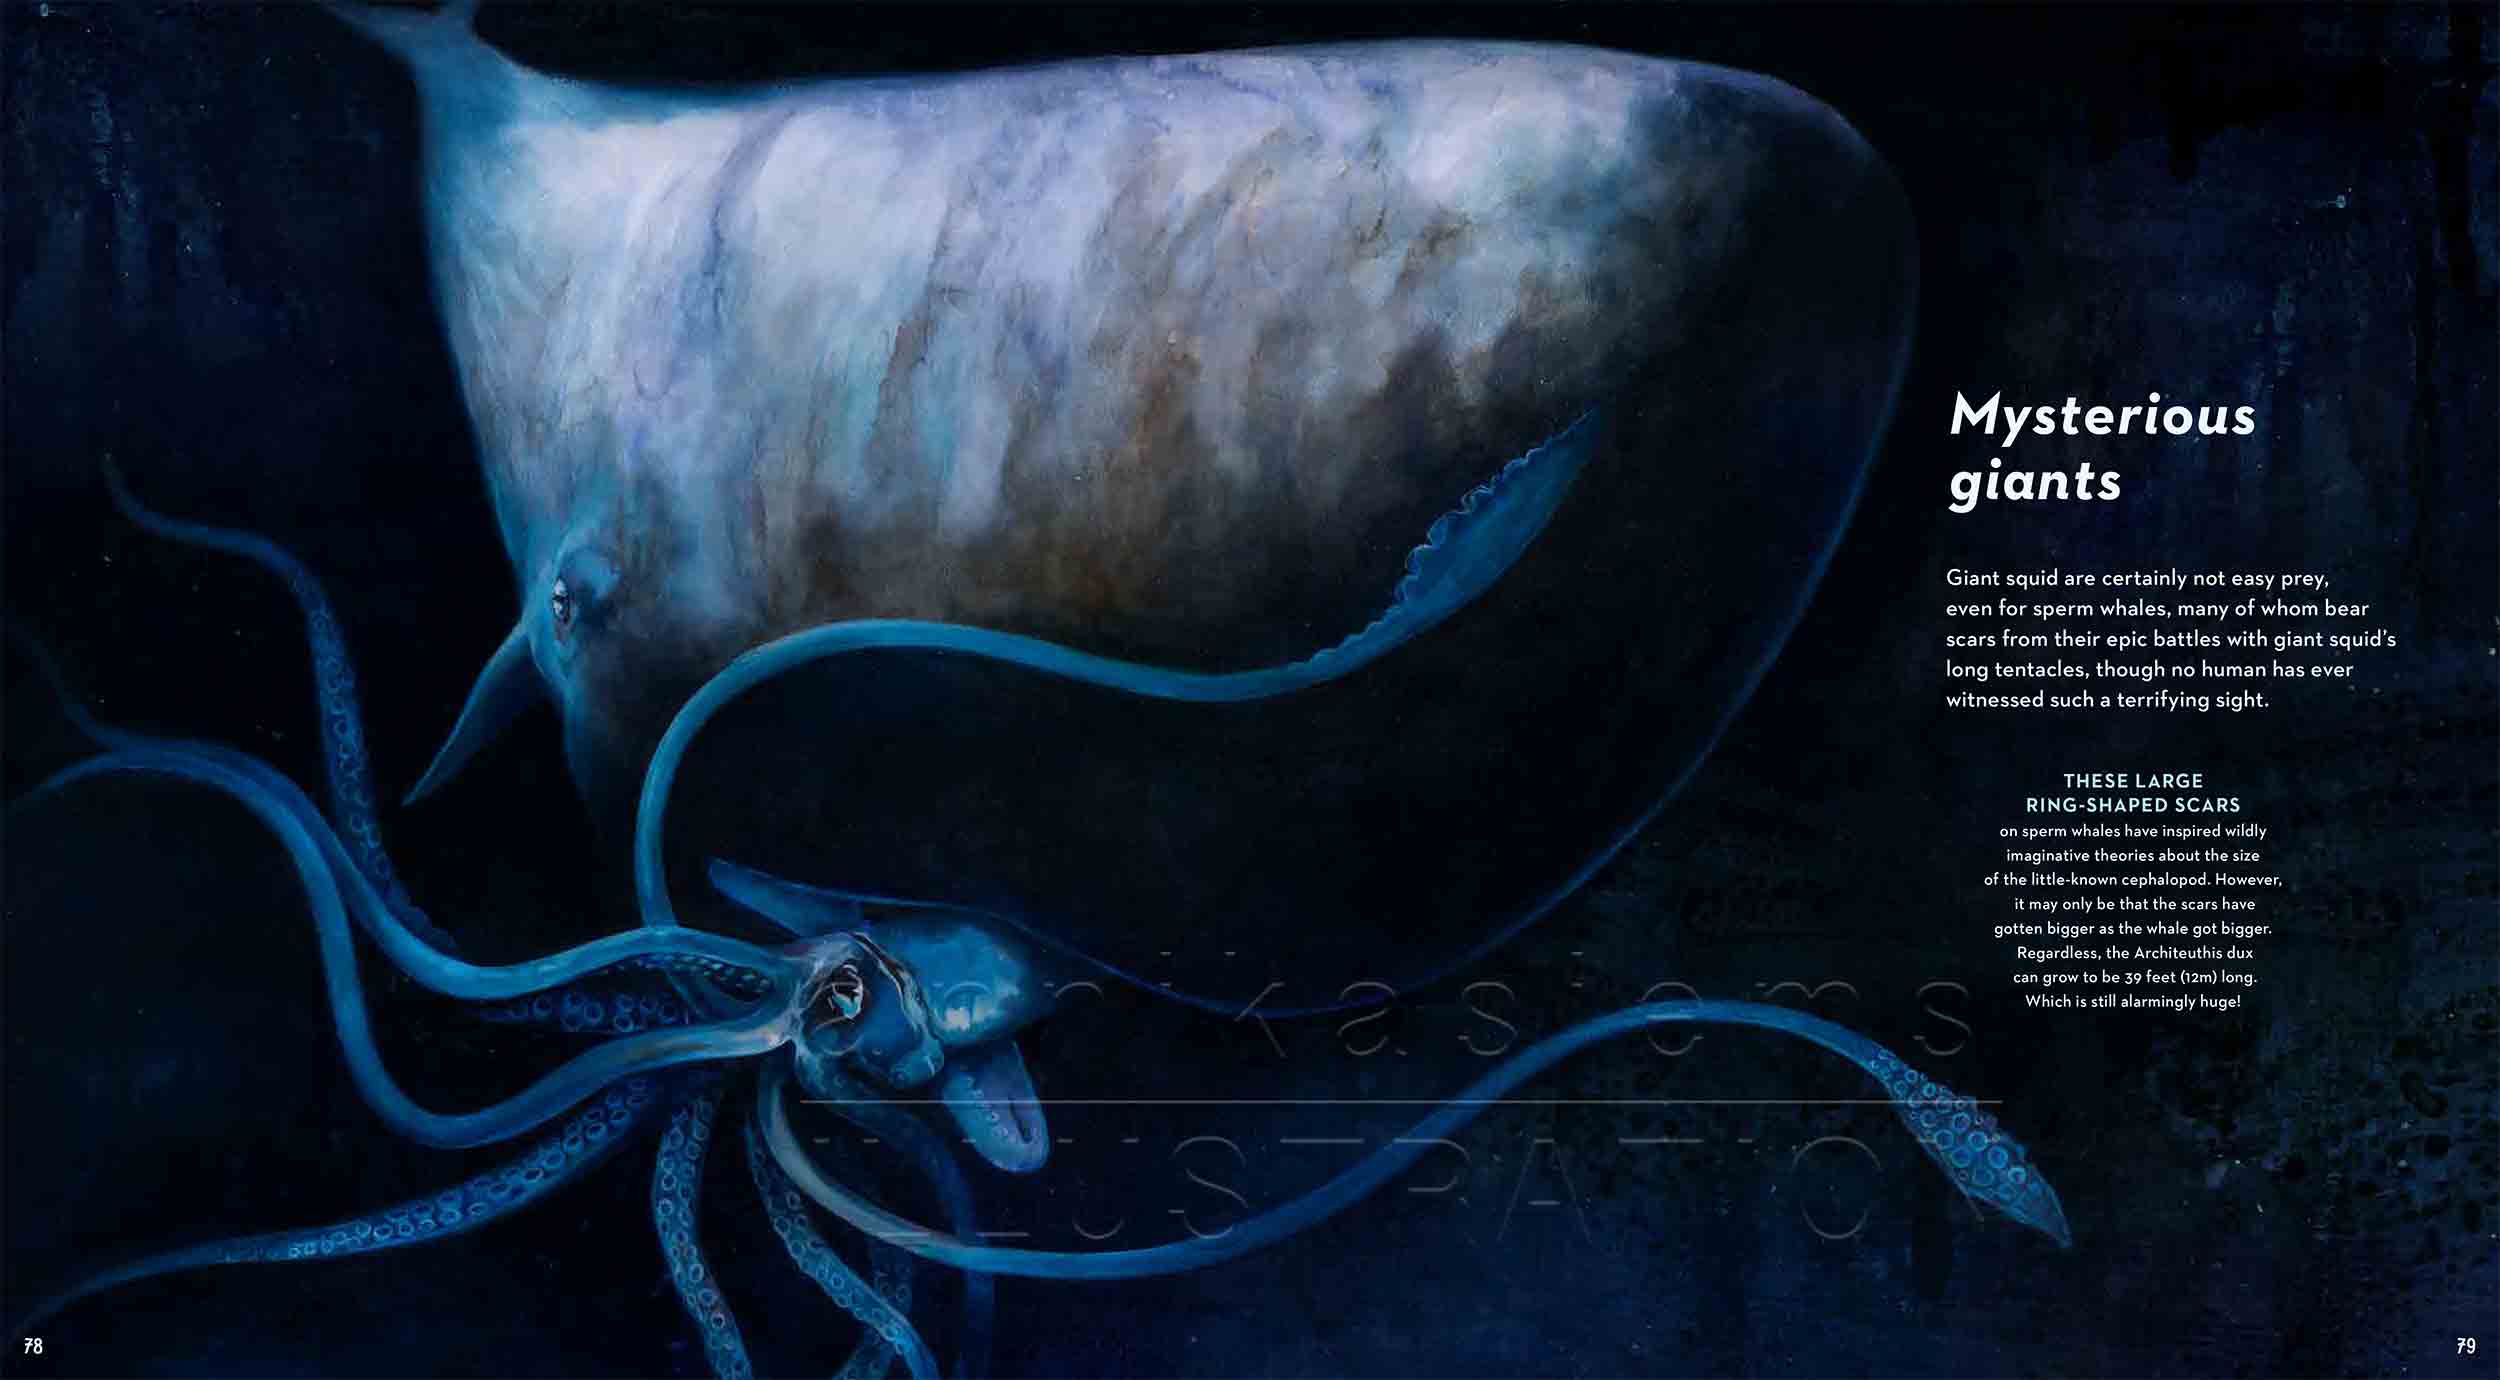 78-79-spermwhale-giantsquid-deep-sea-Englisch-submersible-©annikasiems-plankton_deepsea-zooplankton.jpg